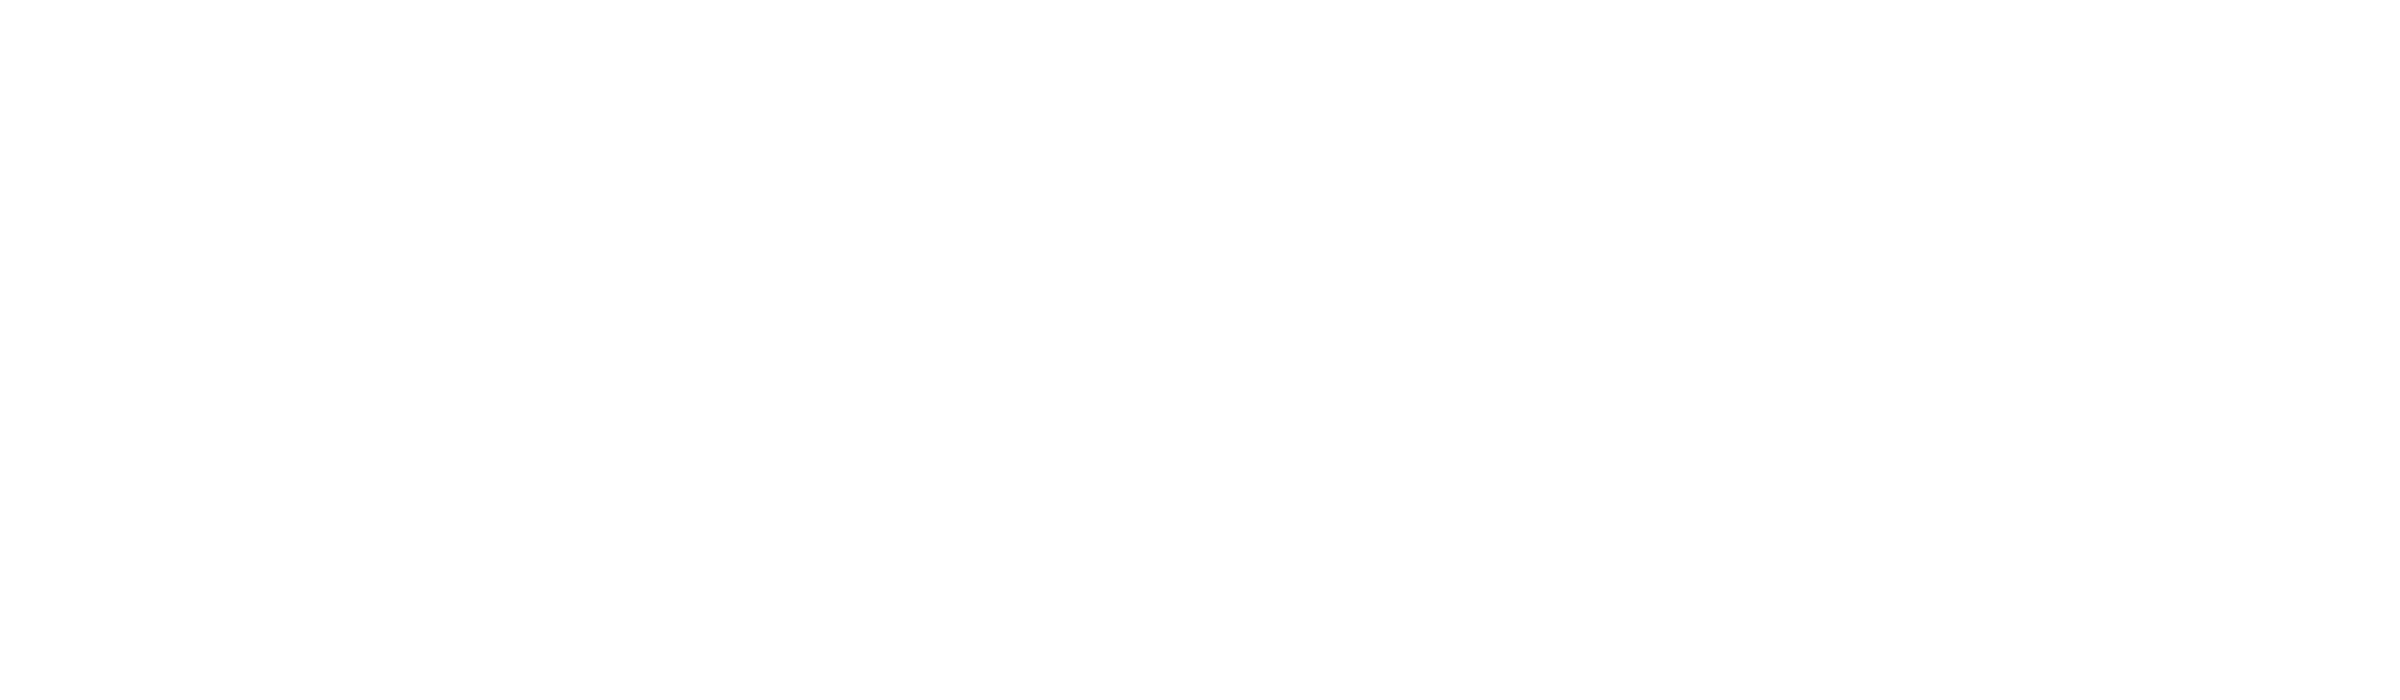 Milk Corso